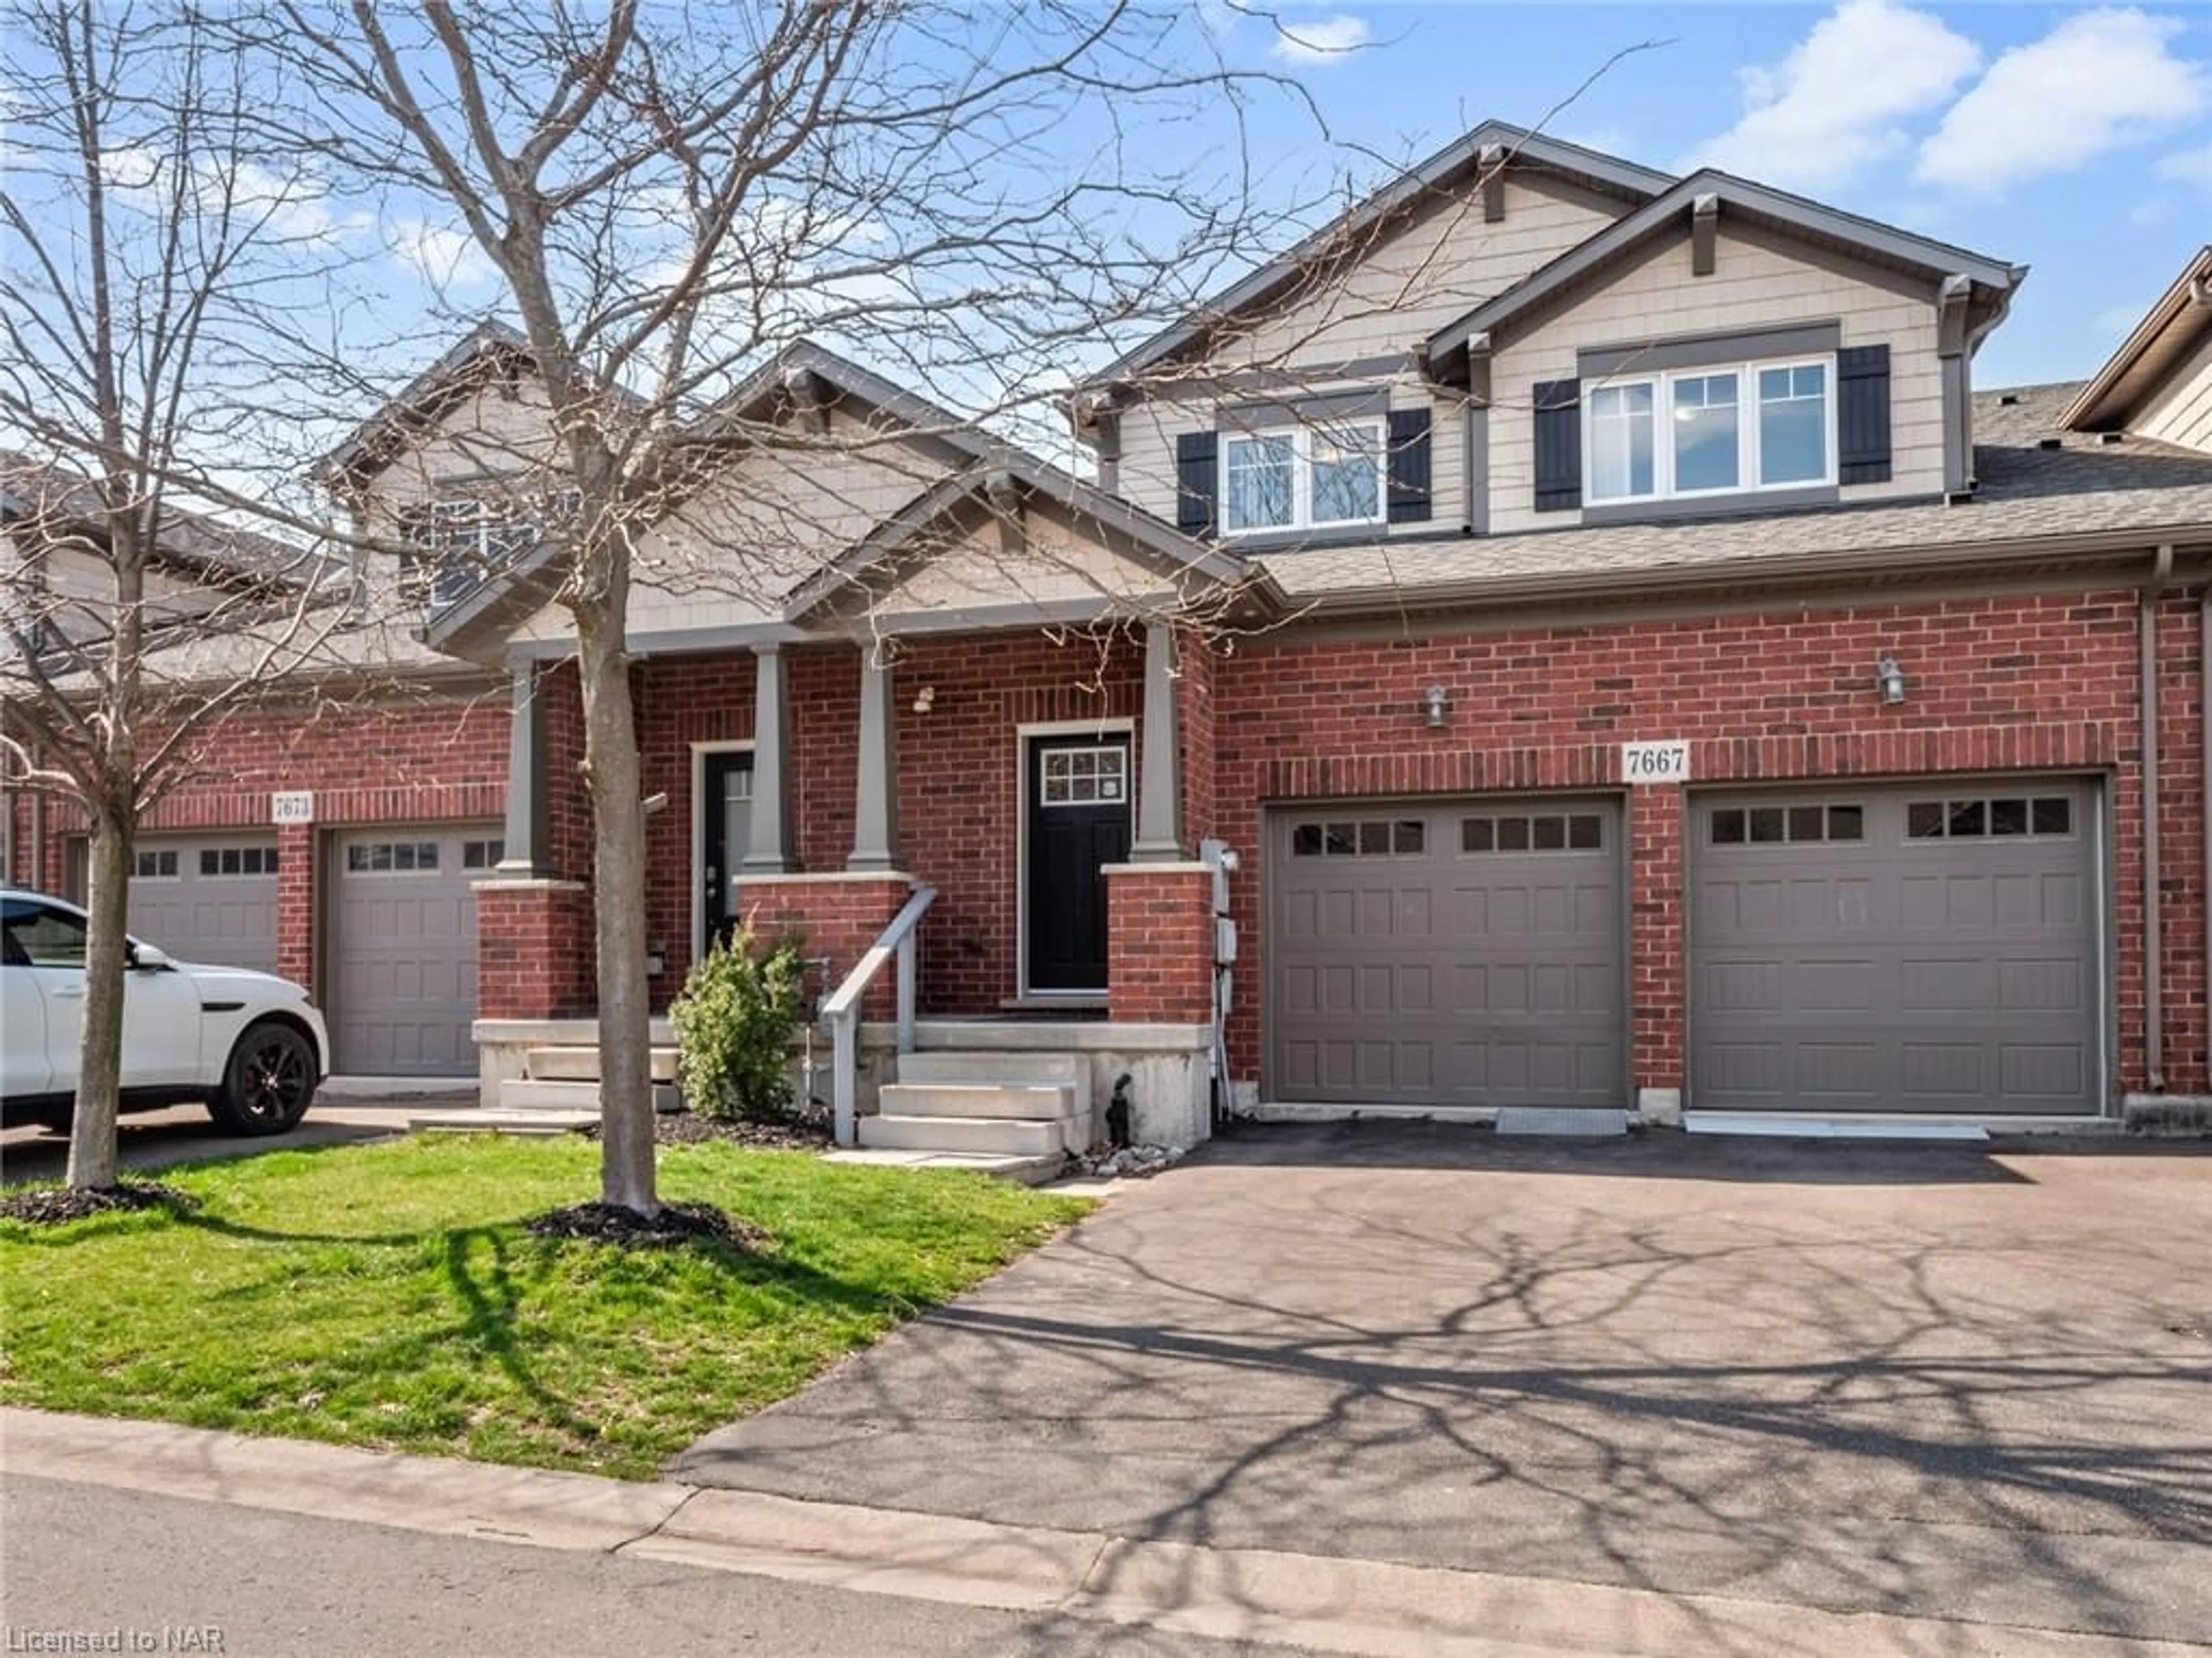 Home with brick exterior material for 7667 Green Vista Gate #141, Niagara Falls Ontario L2G 0A8